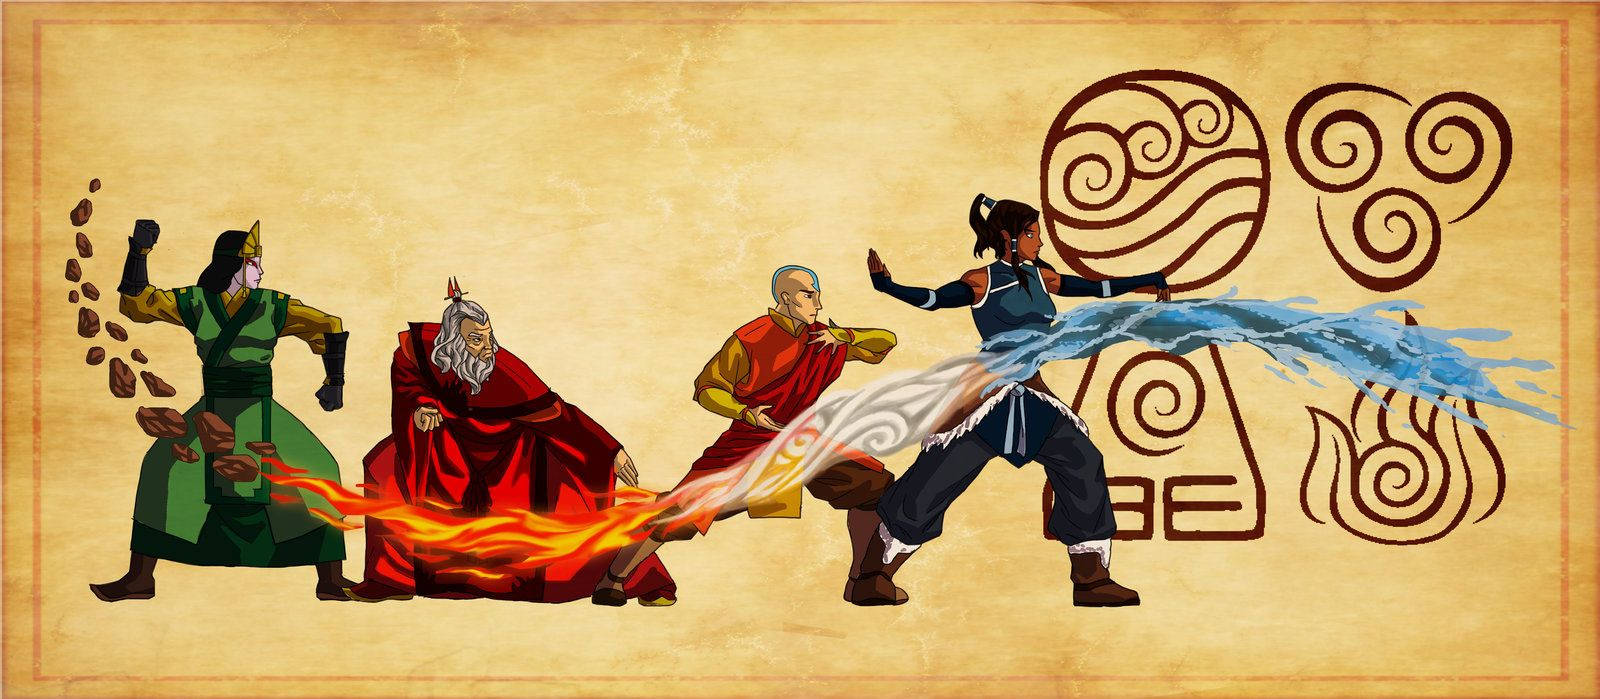 Avatar The Last Airbender Four Avatars Background